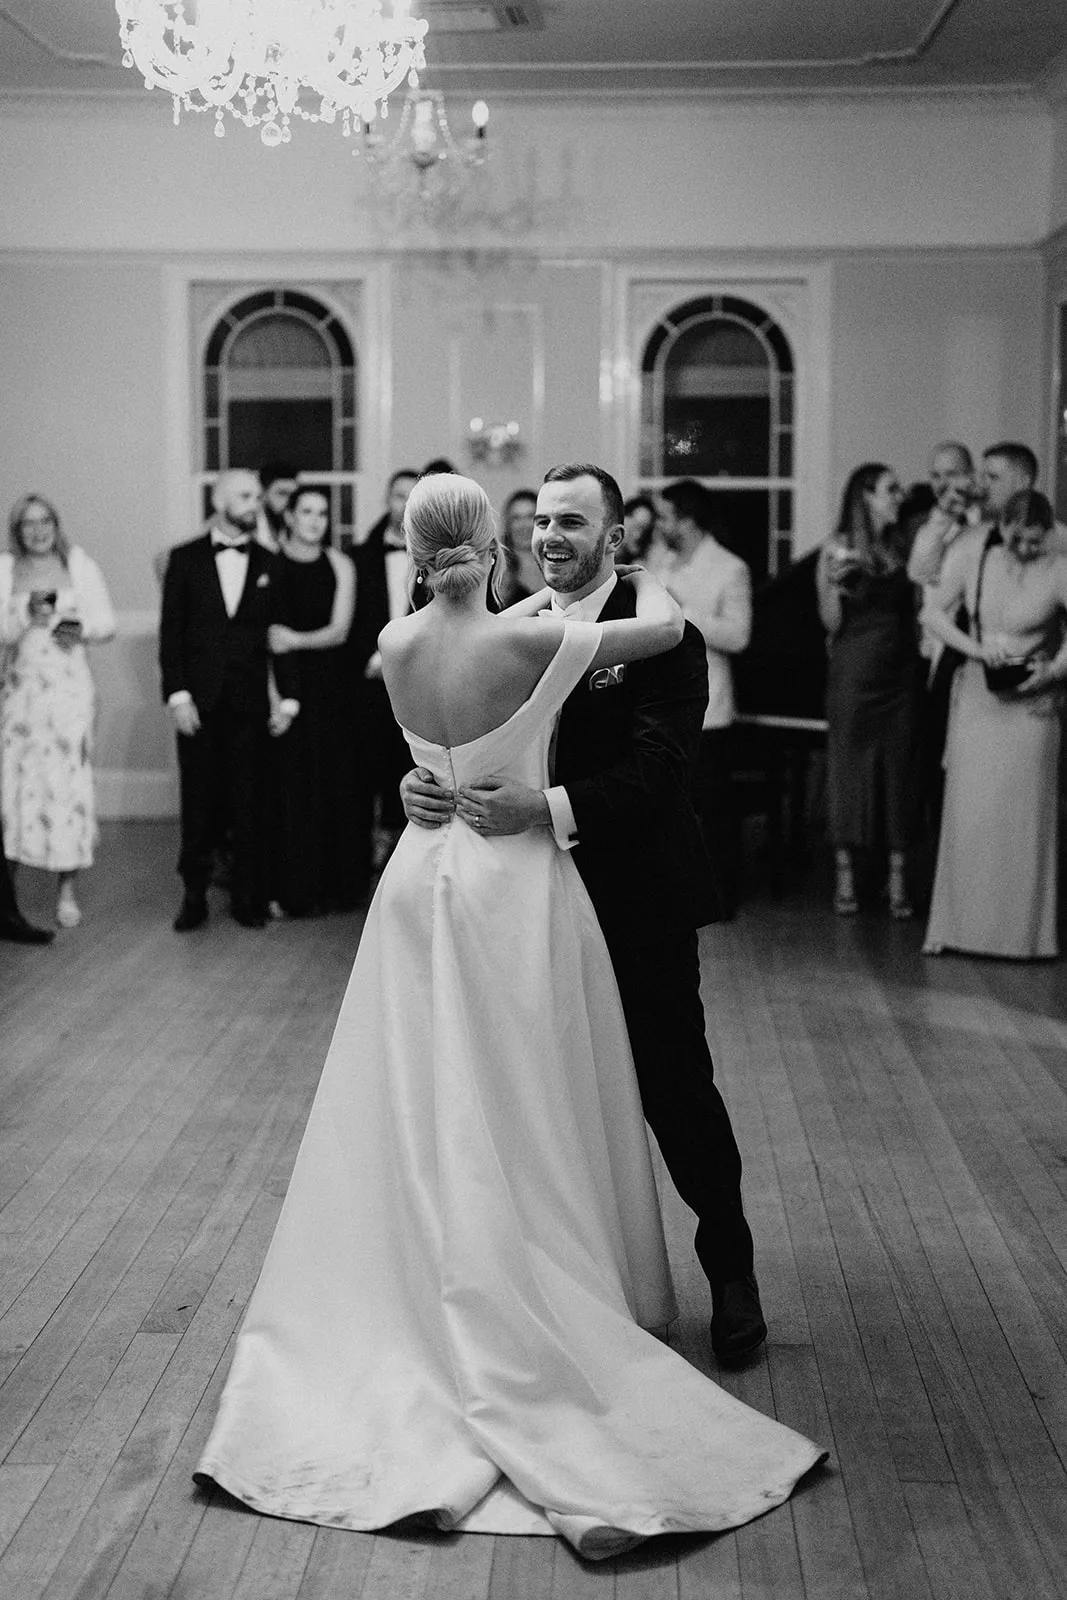 Bride and groom dancing in ballroom